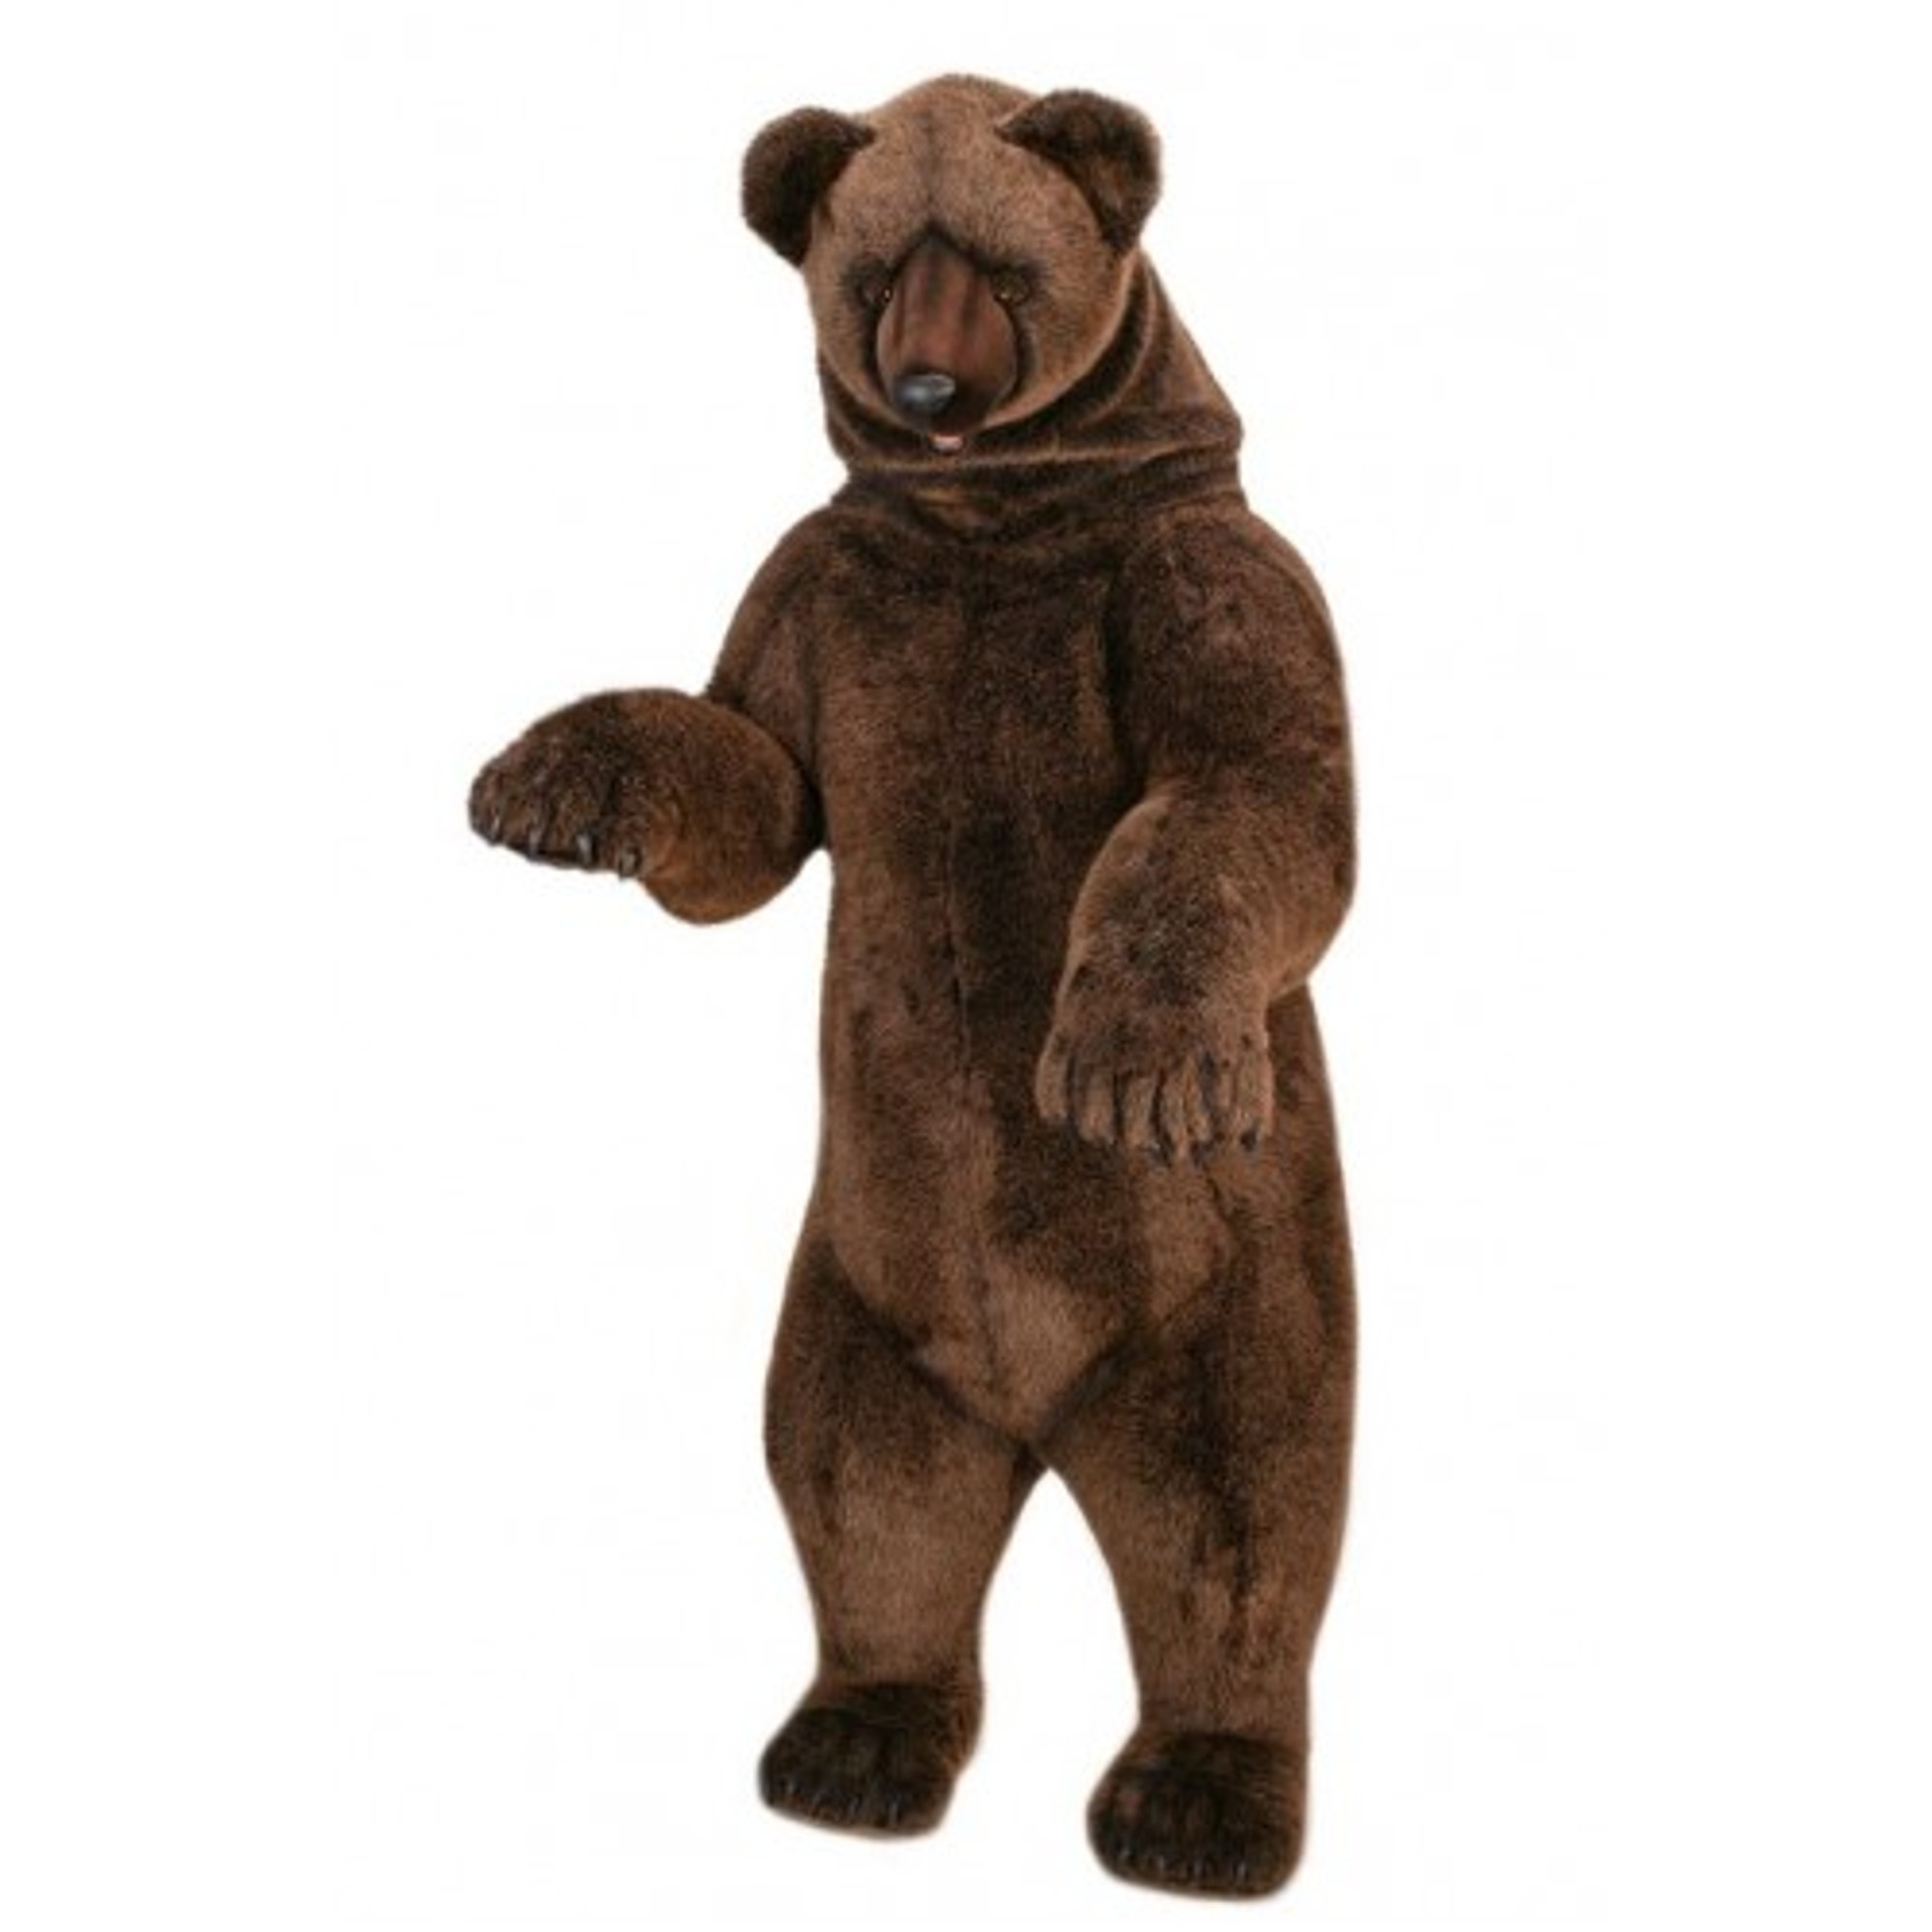 giant bear stuffed animal